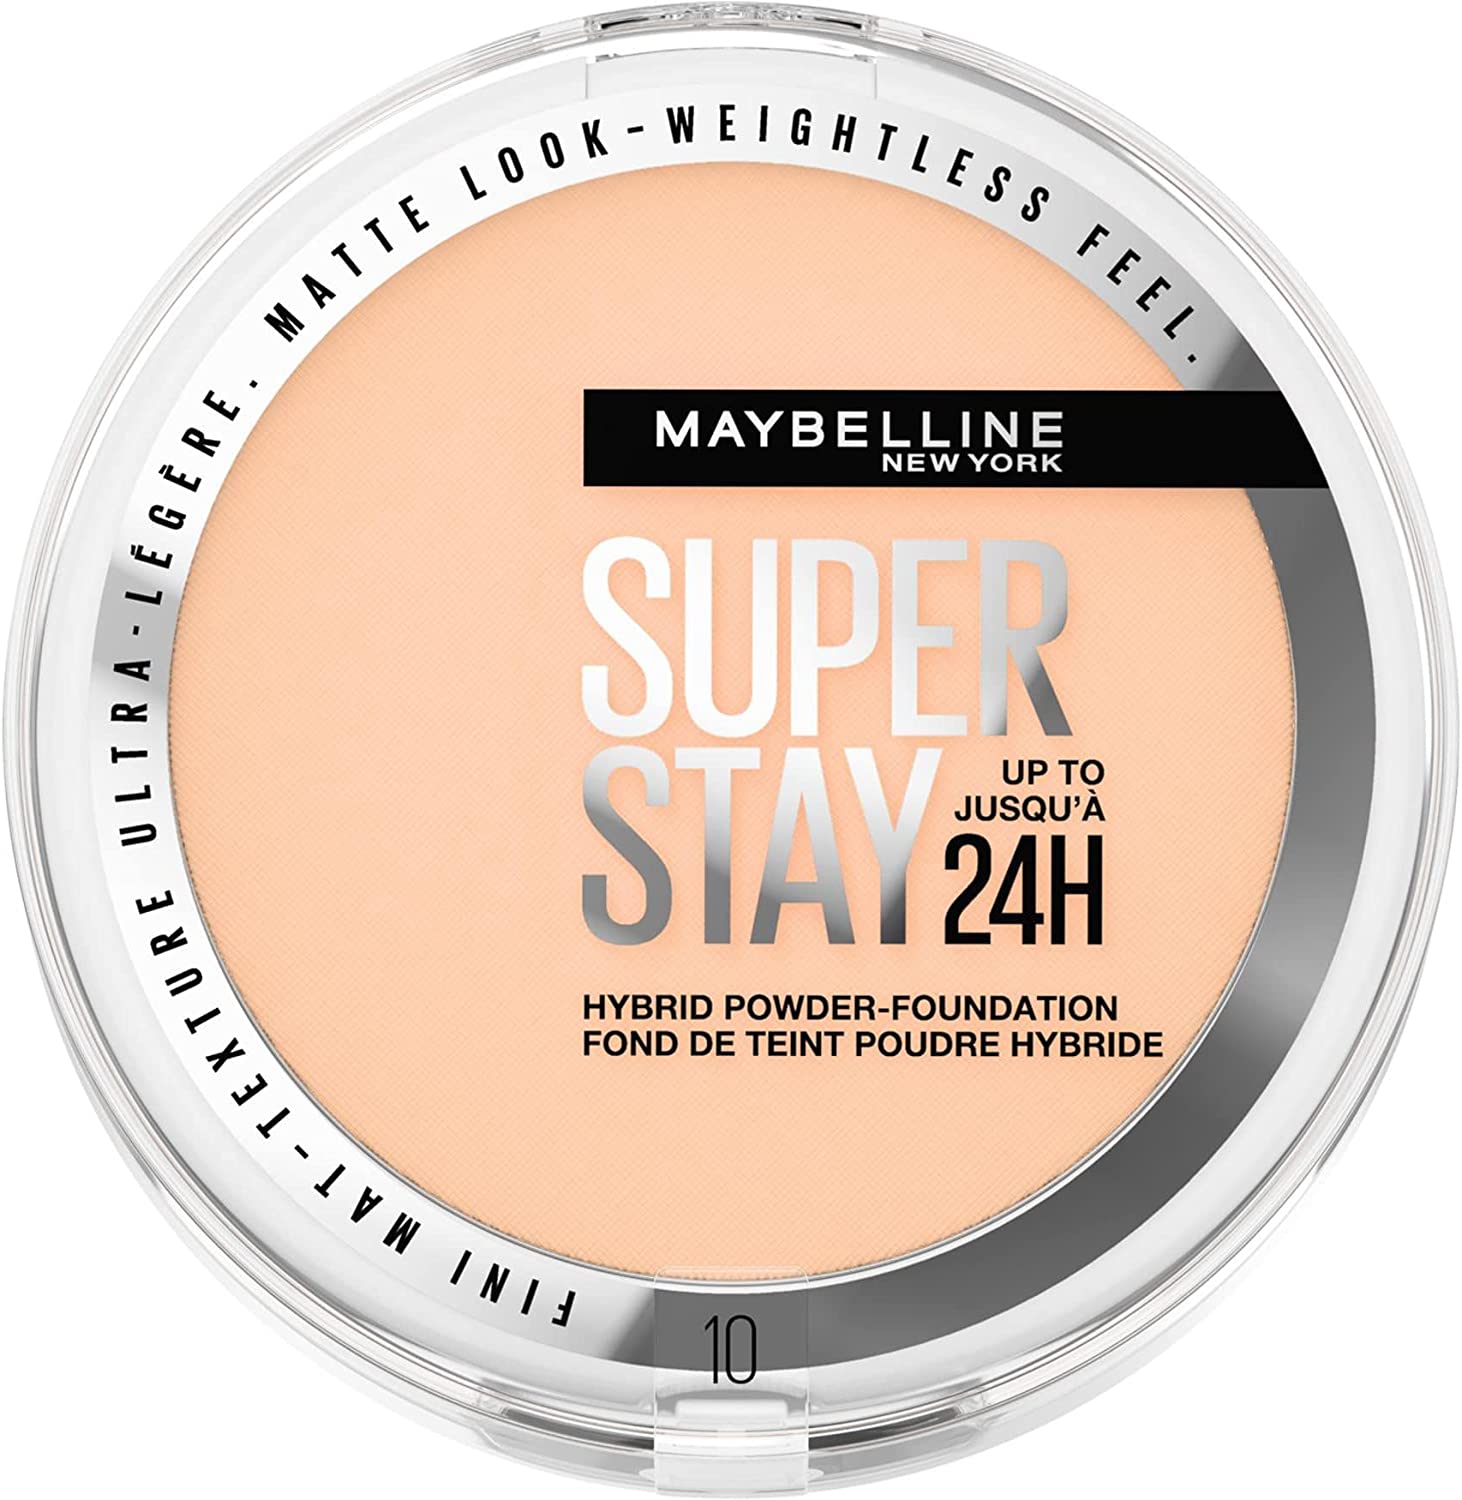 Maybelline Super Stay 24h Hybrid Powder Foundation Colour 10